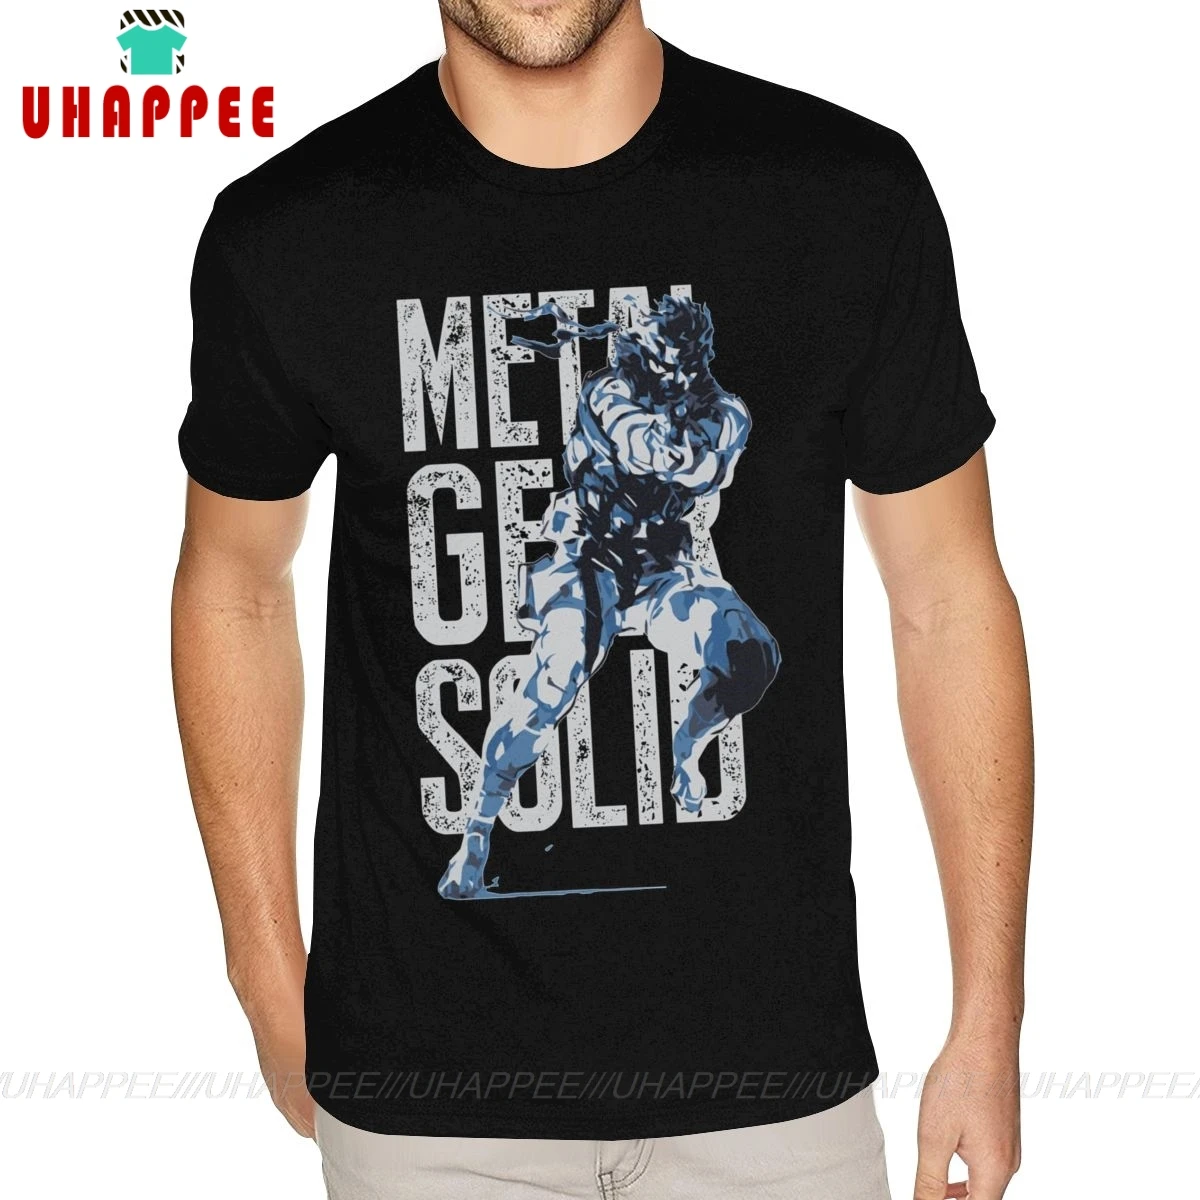 metal gear solid t shirt